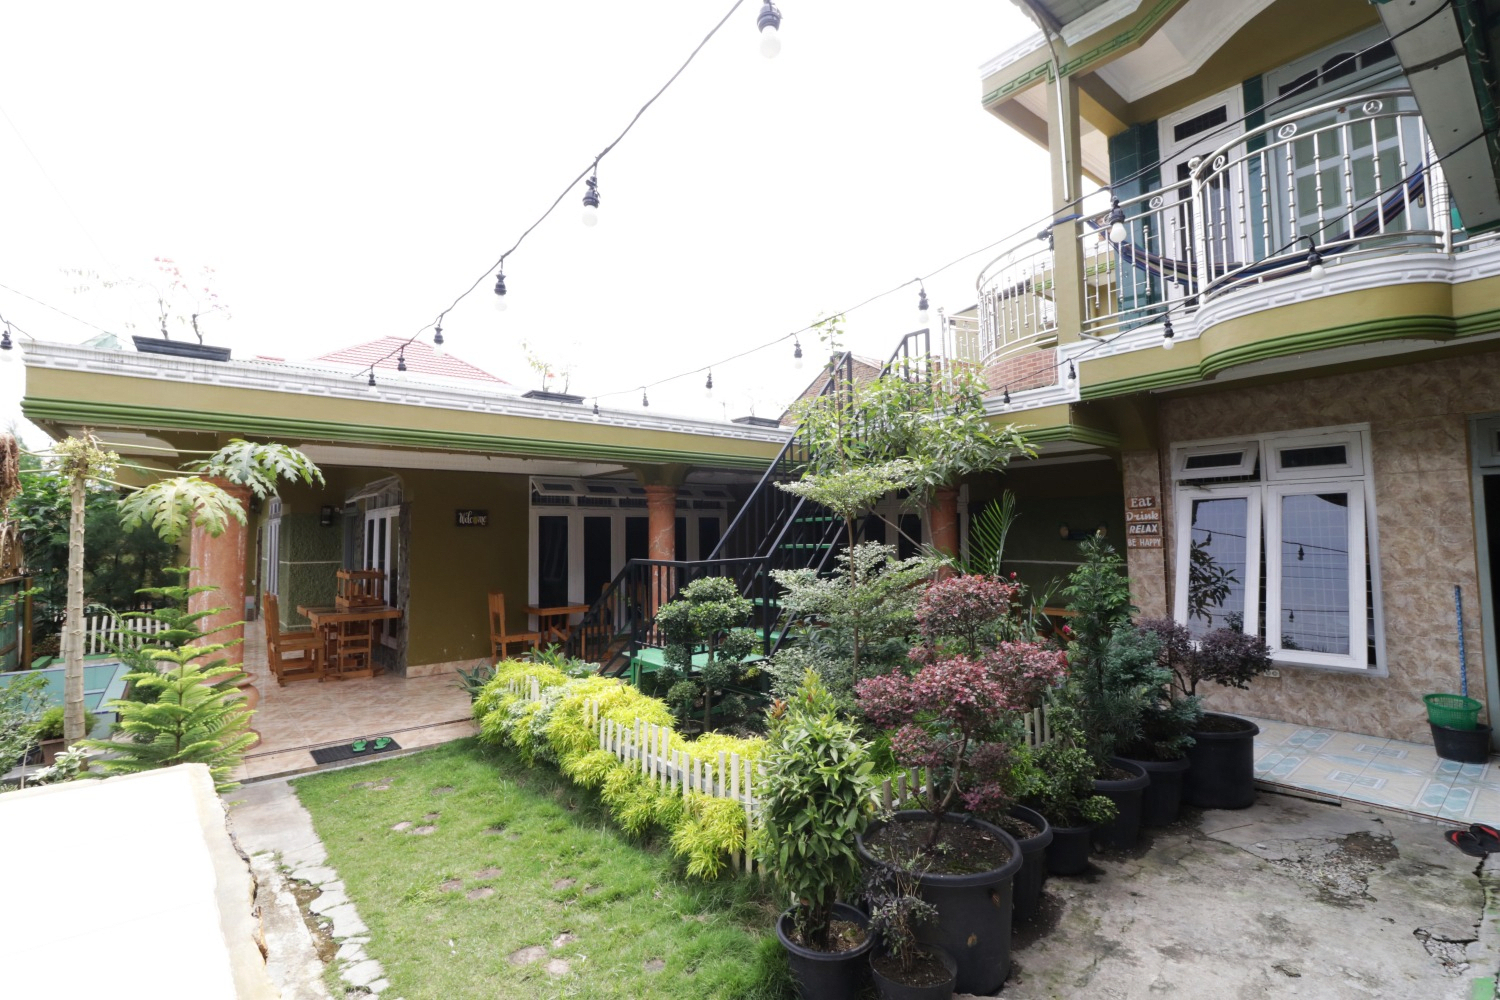 Exterior & Views 1, Waroeng Transit & Depary Homestay, Binjai